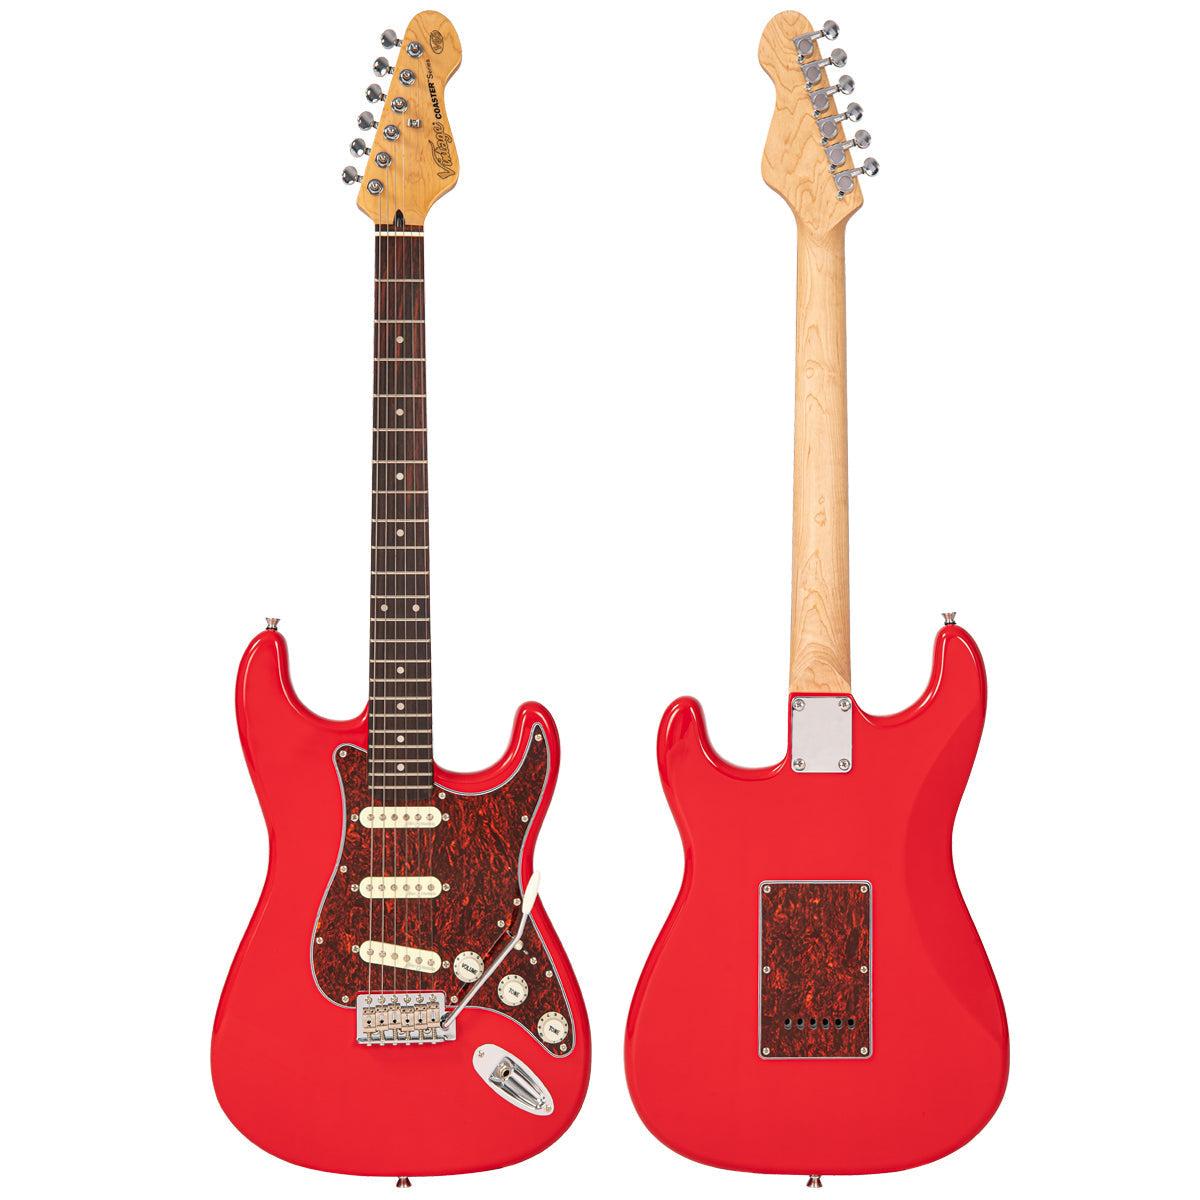 Vintage V60 Coaster Series Electric Guitar ~ Gloss Red, Electric Guitar for sale at Richards Guitars.